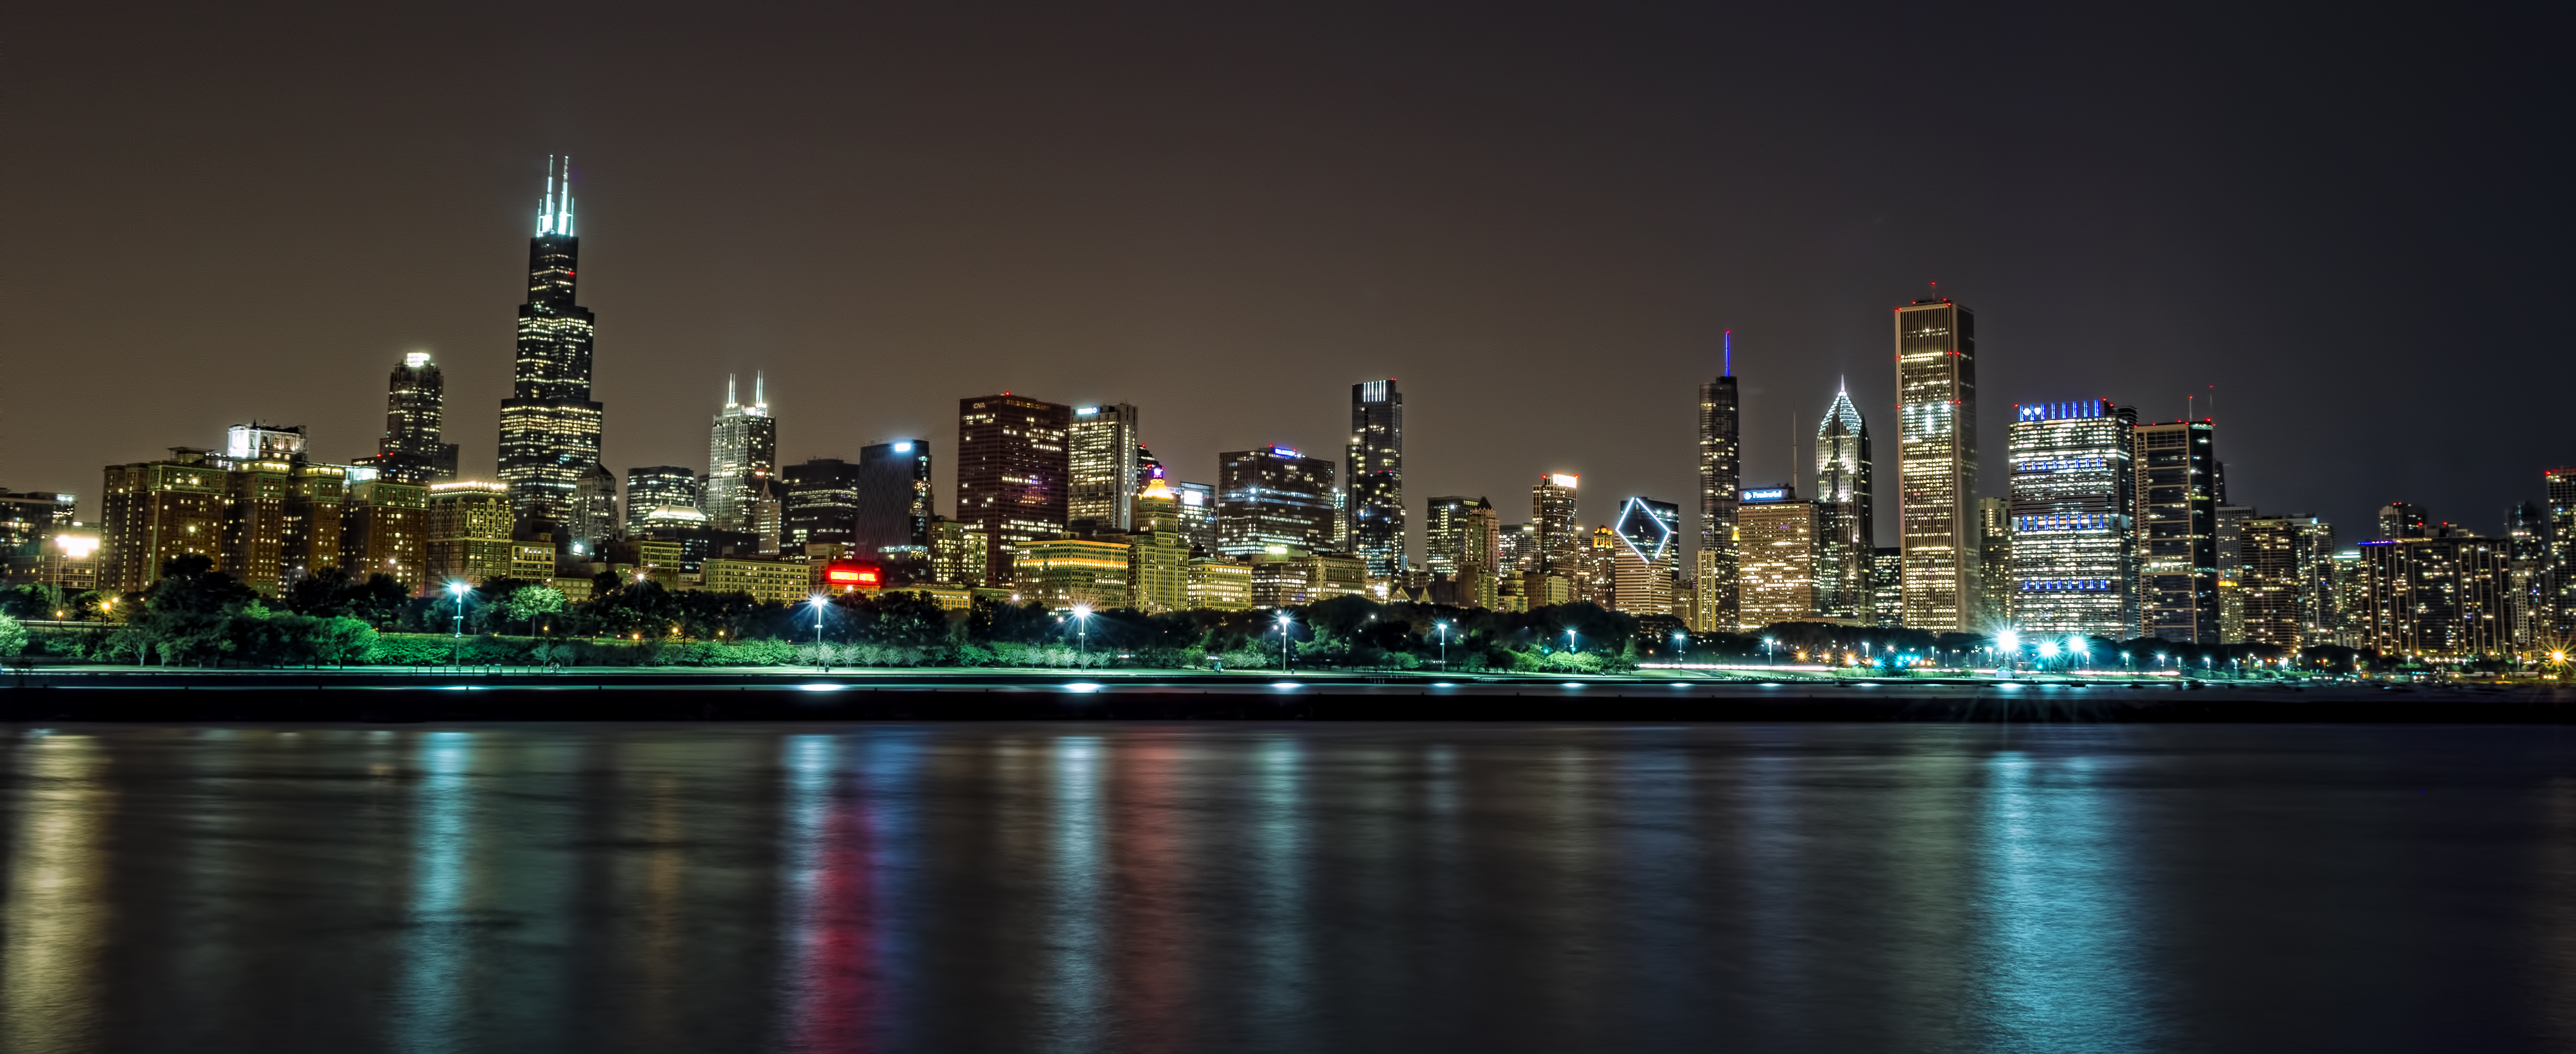 File:City of Chicago from Adler Planetarium.jpg - Wikimedia Commons